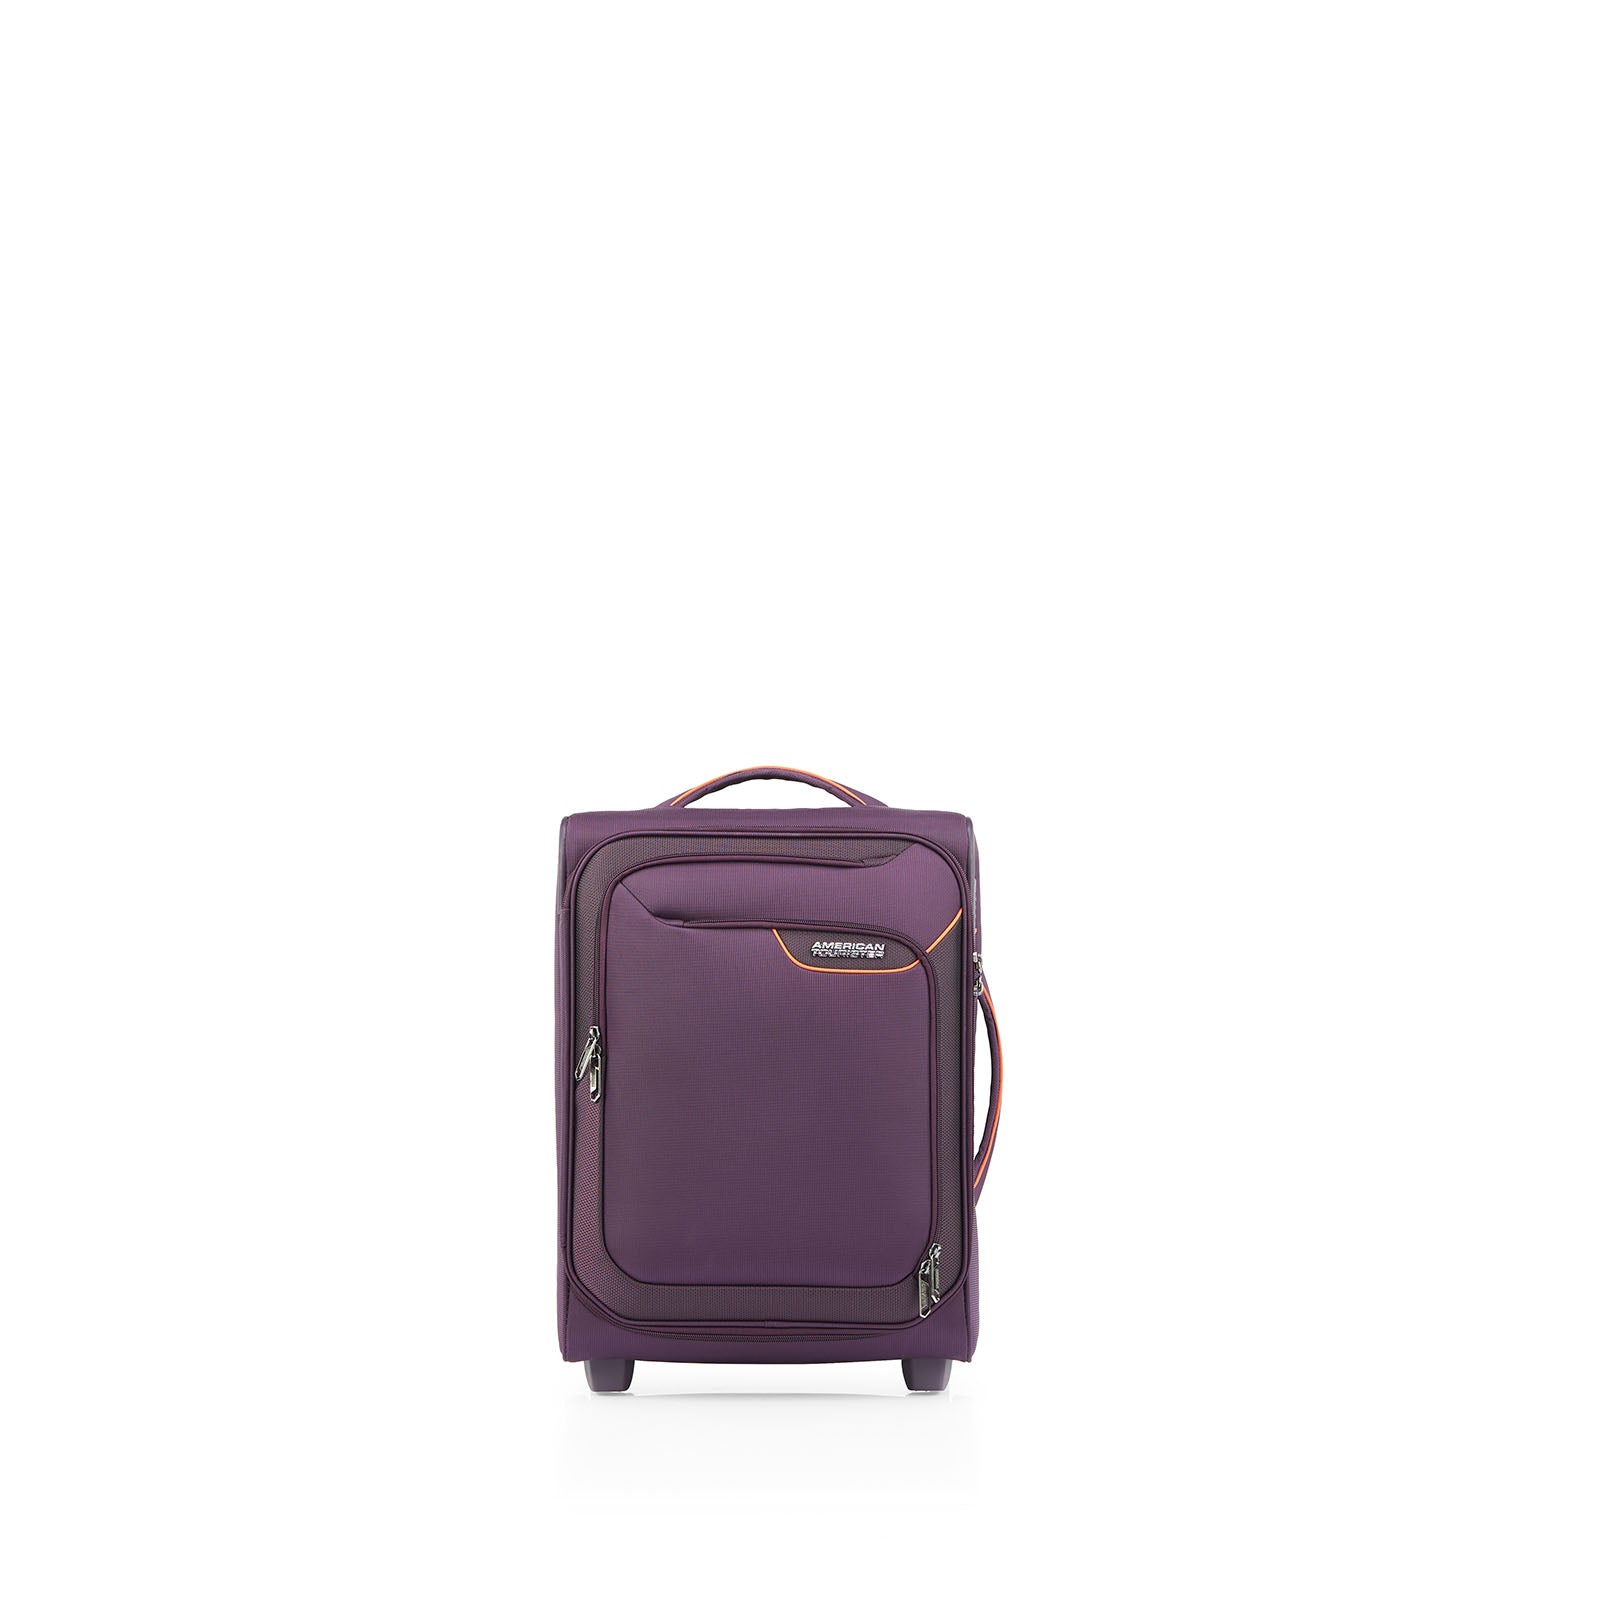 American-Tourister-Applite-4-Eco-50cm-Carry-On-Suitcase-Purple-Orange-Front